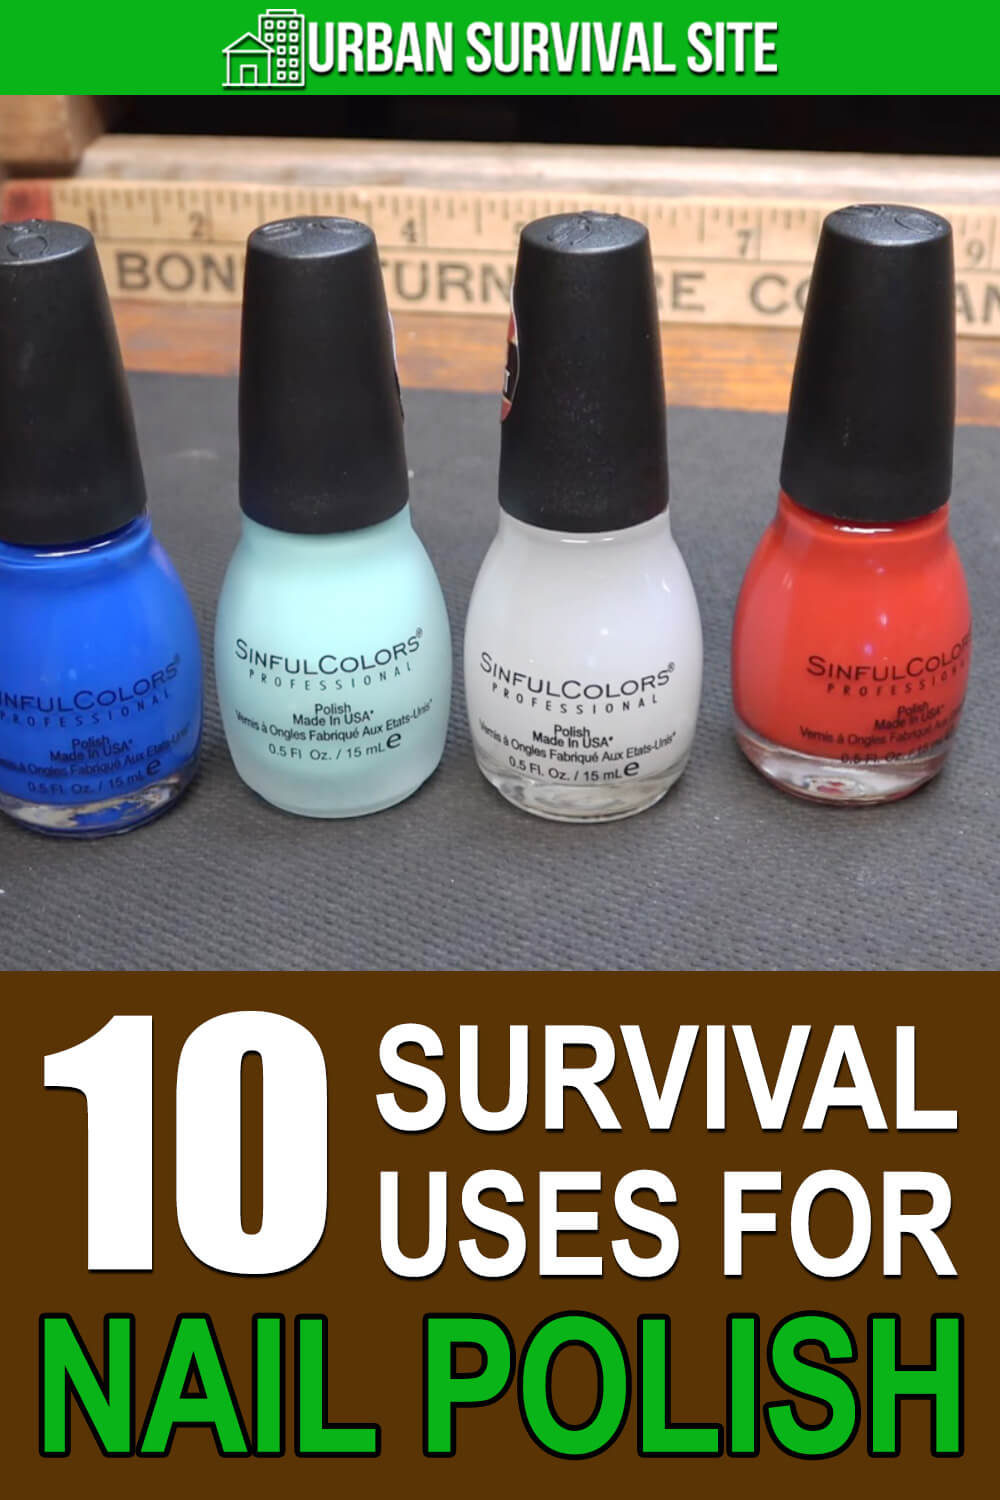 10 Survival Uses for Nail Polish